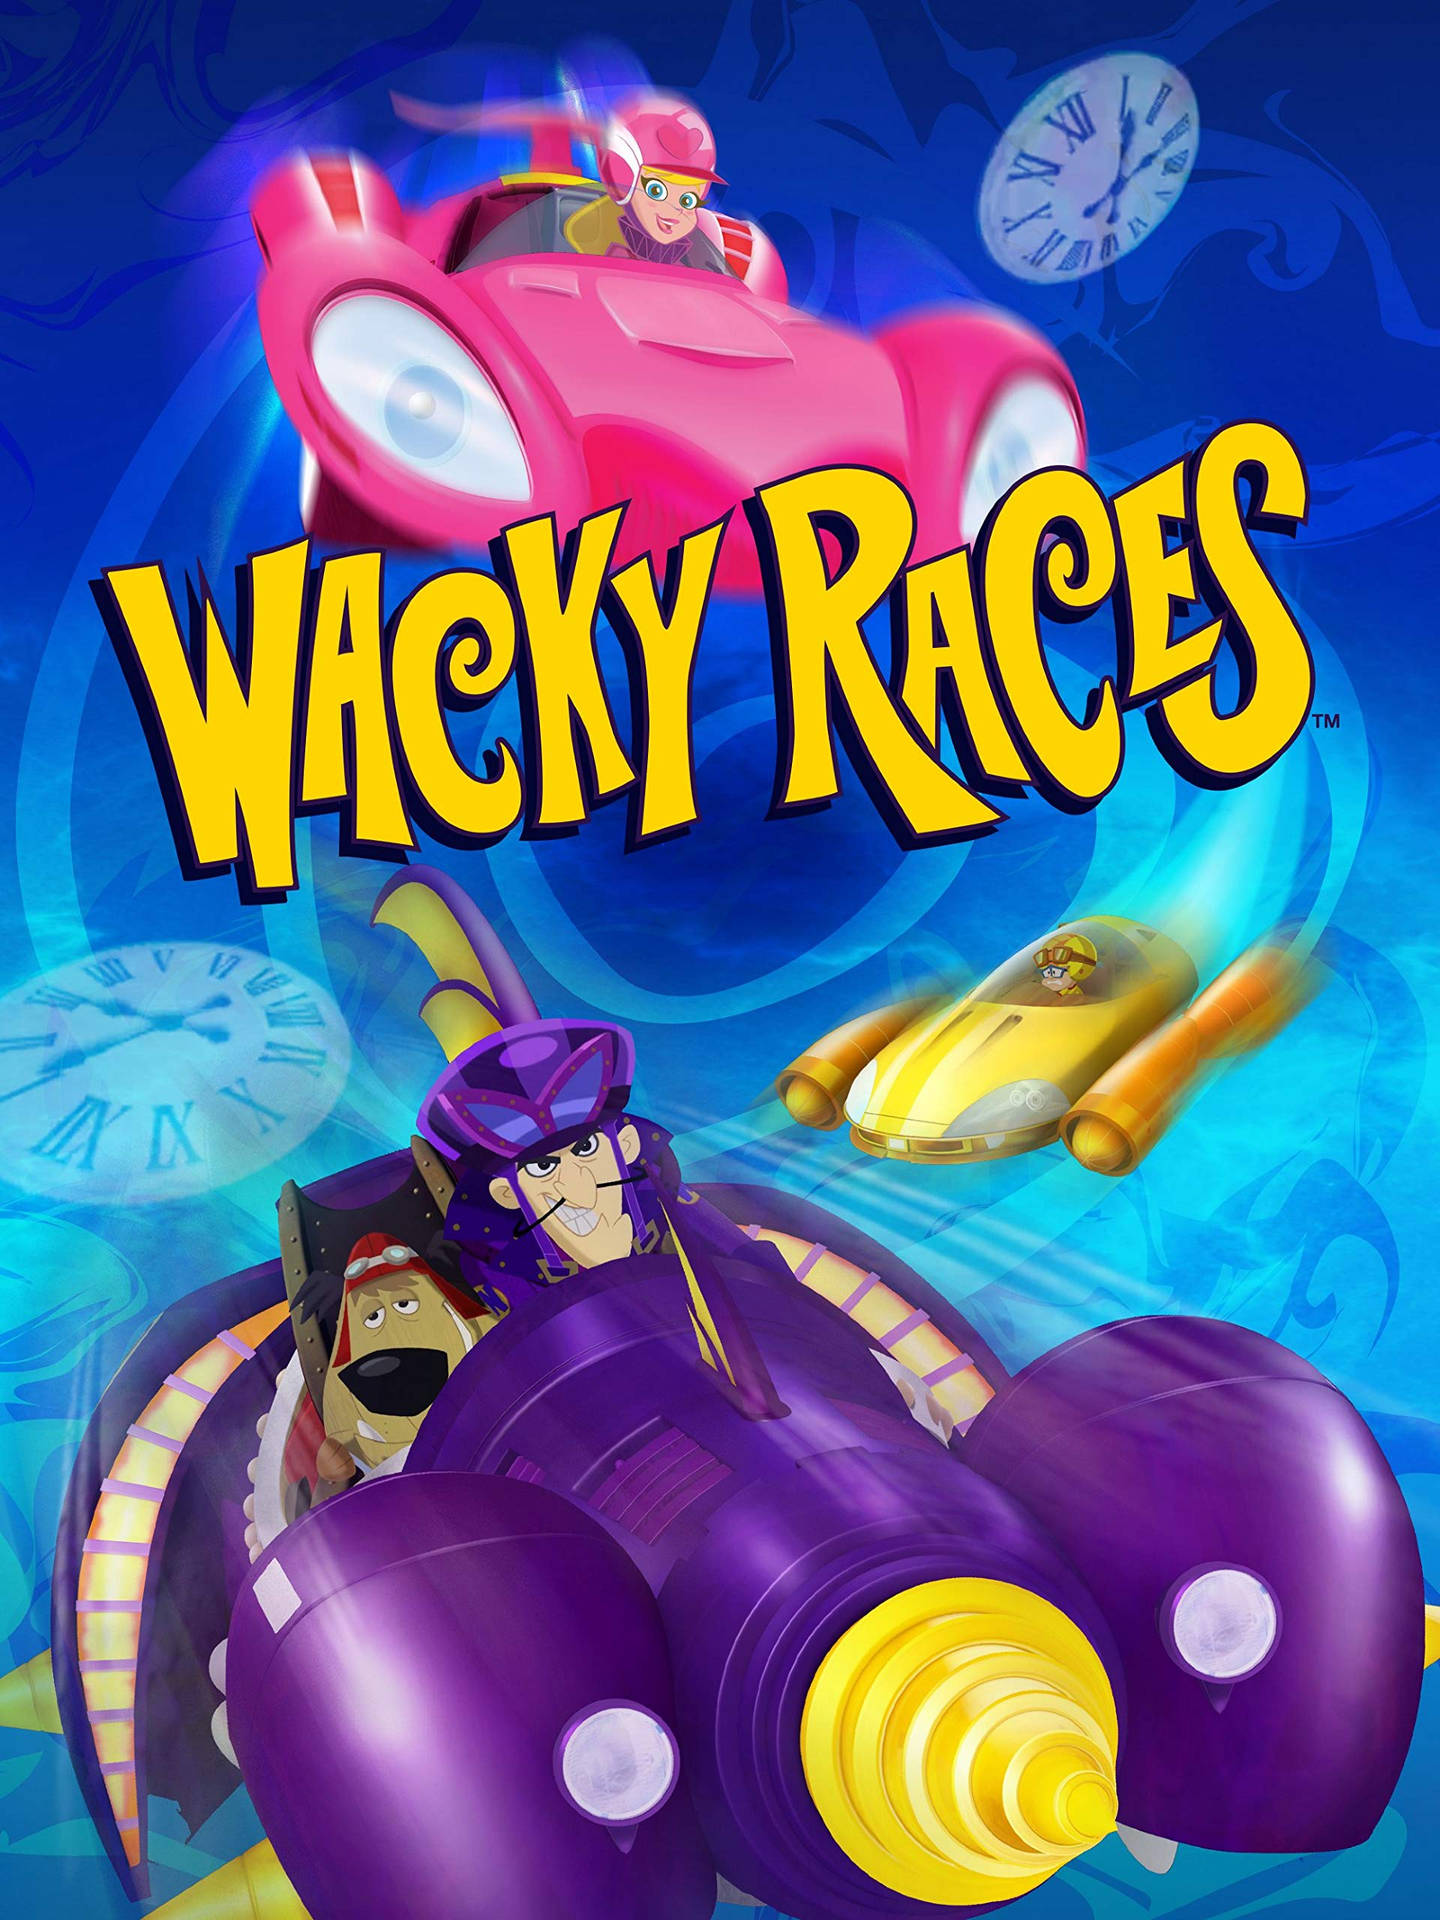 Wacky Races Background Wallpaper